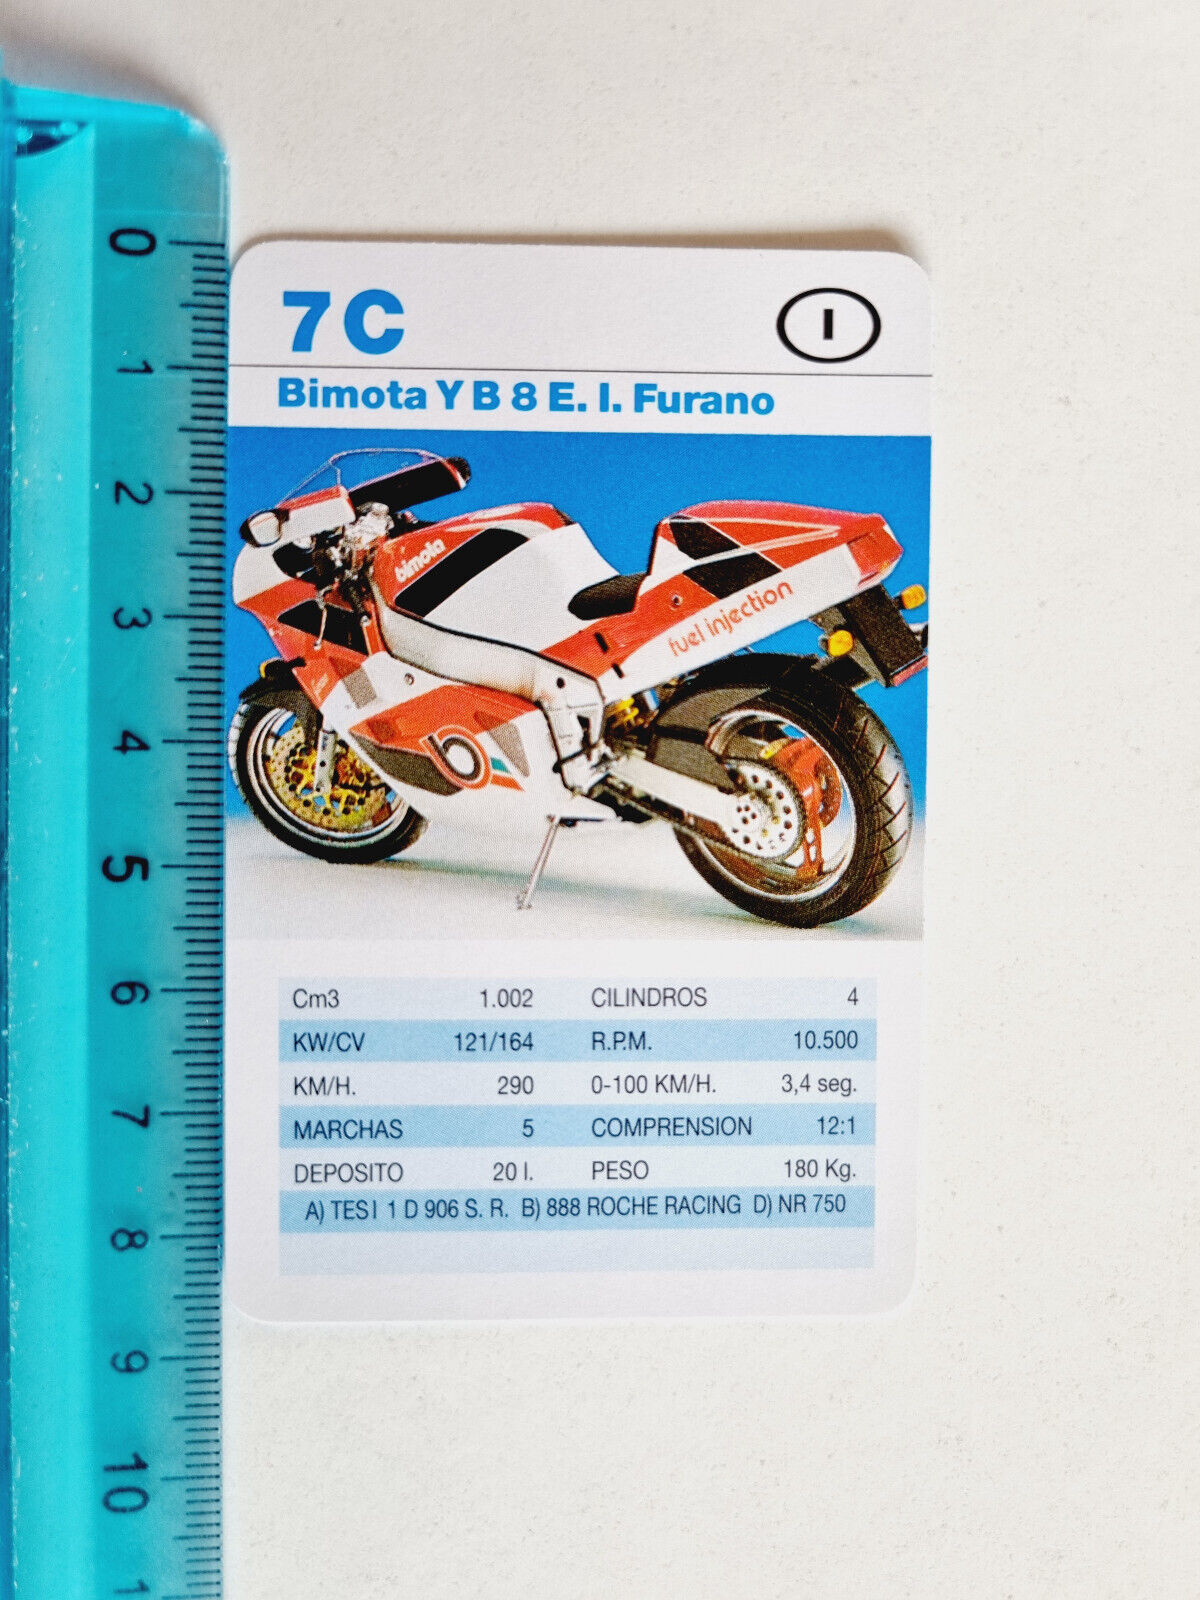 Bimota Y B 8 Furano Rare Playing Card Motorcycle Four Original New